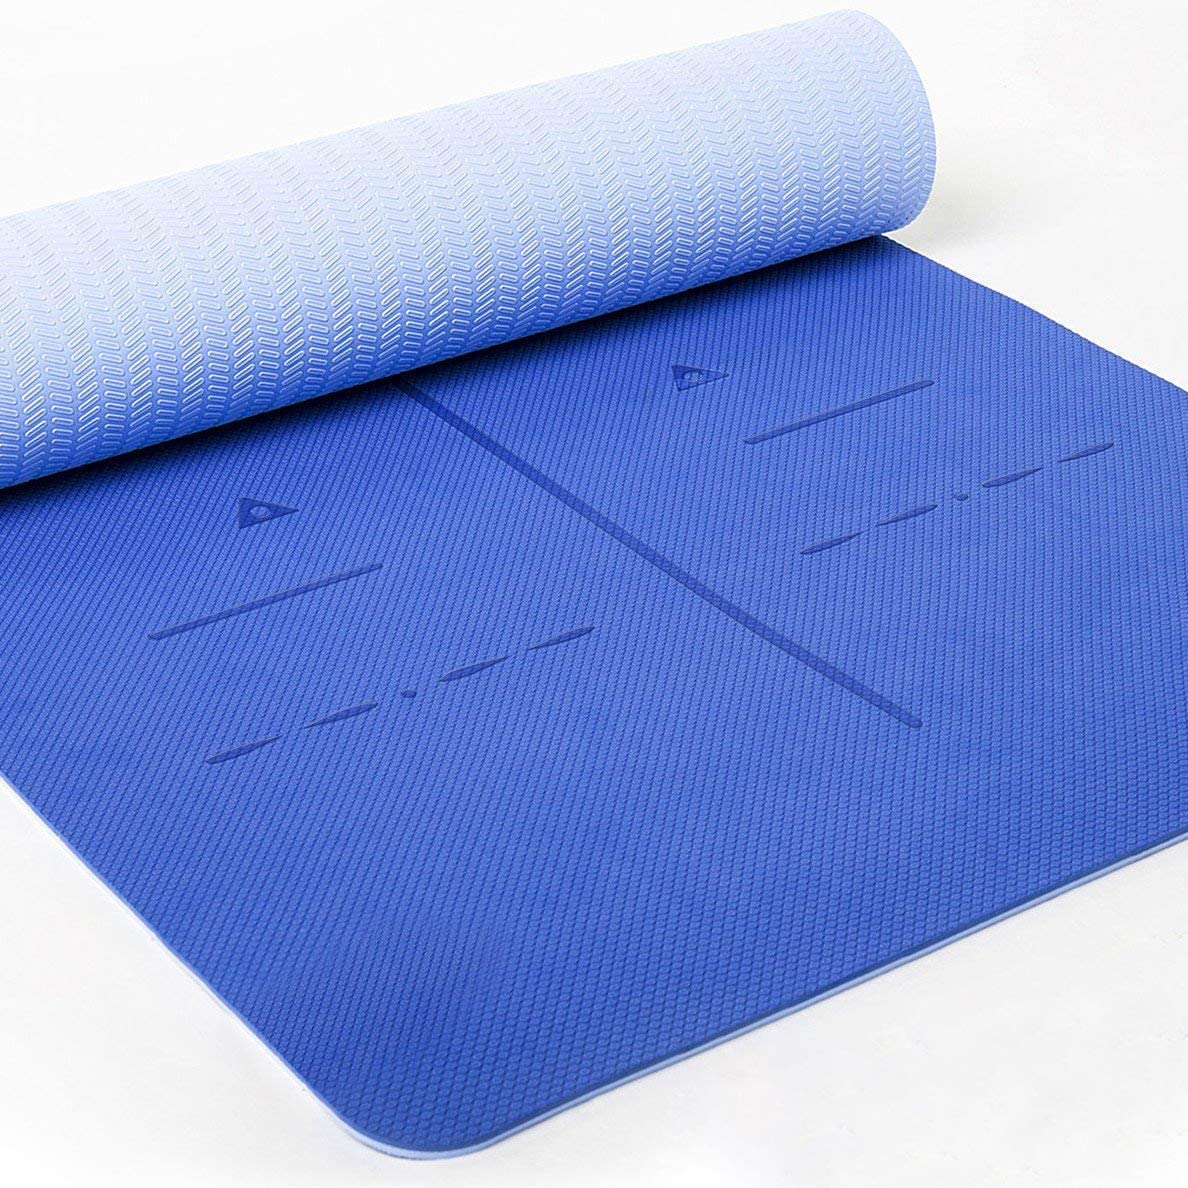 Healthyoga's Eco-friendly Non-slip Yoga Mat